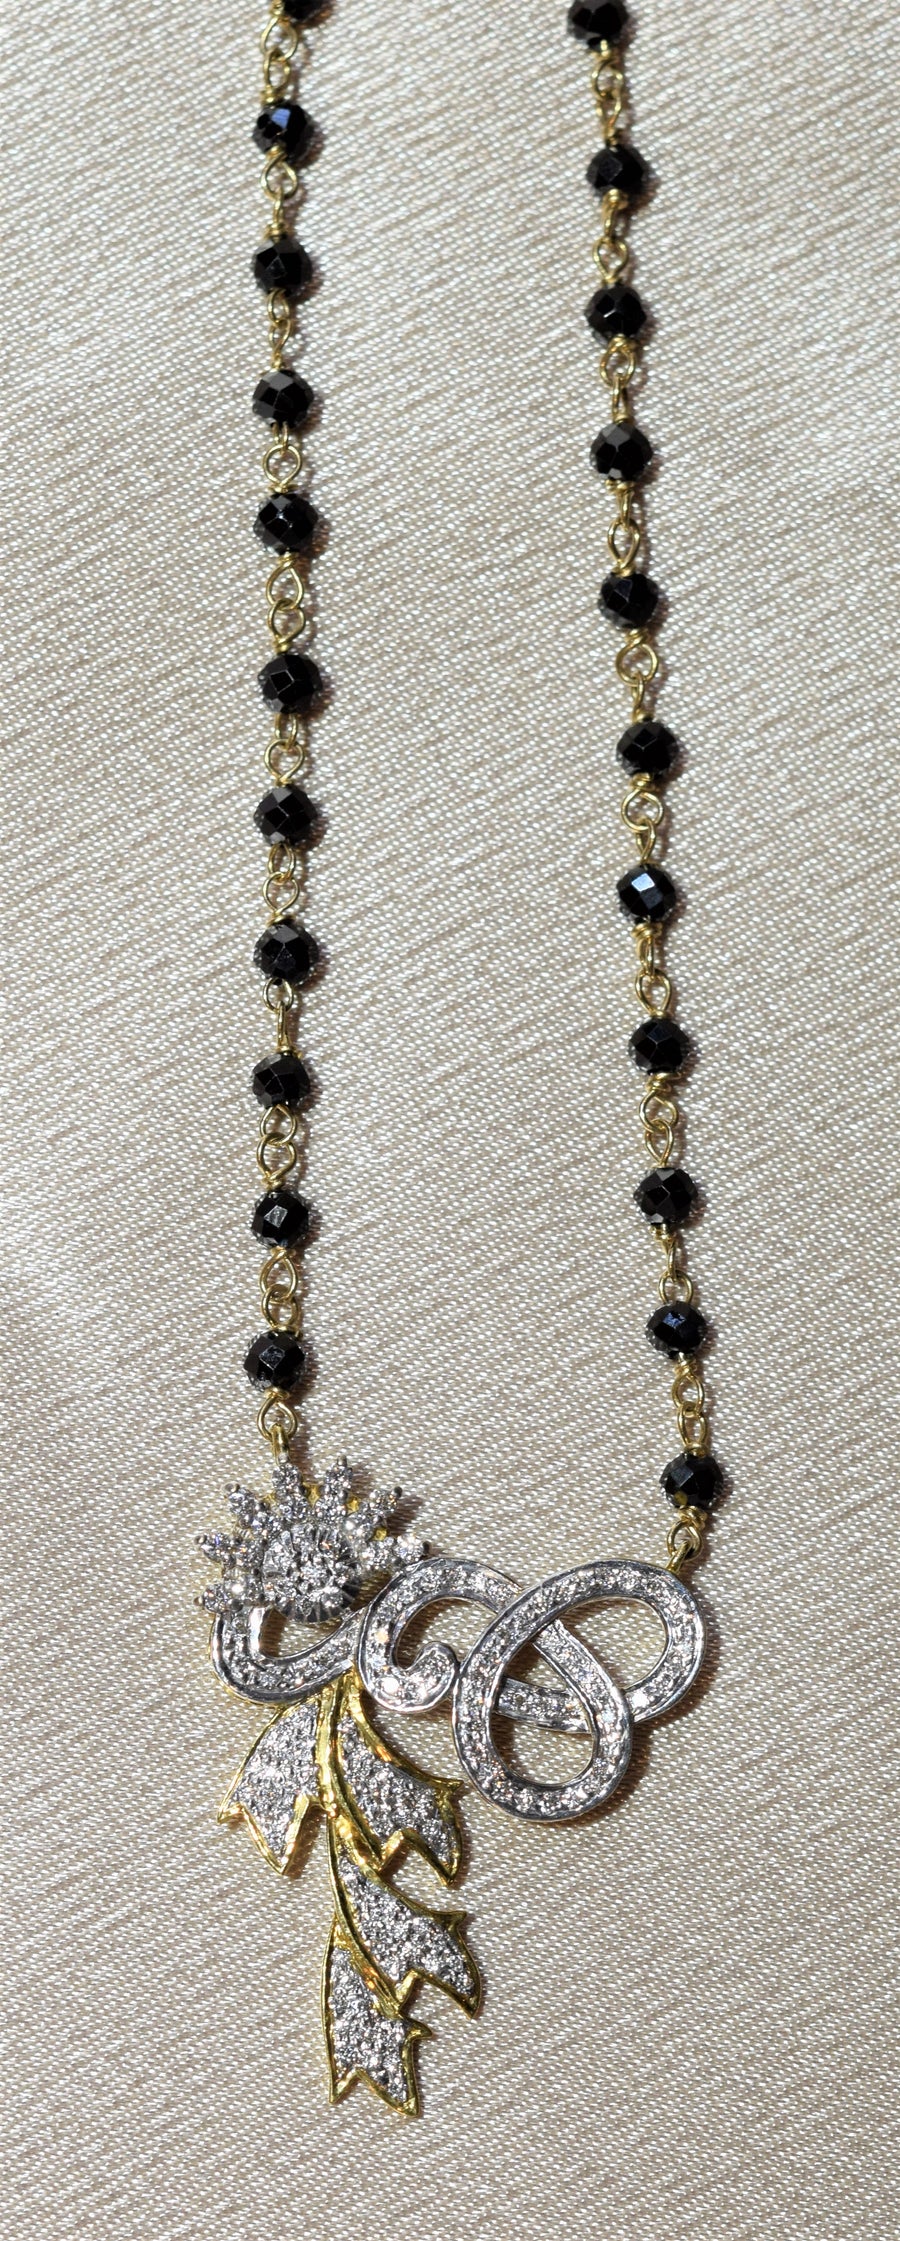 Nastrino with Embellishment Diamond Pendant - $1800